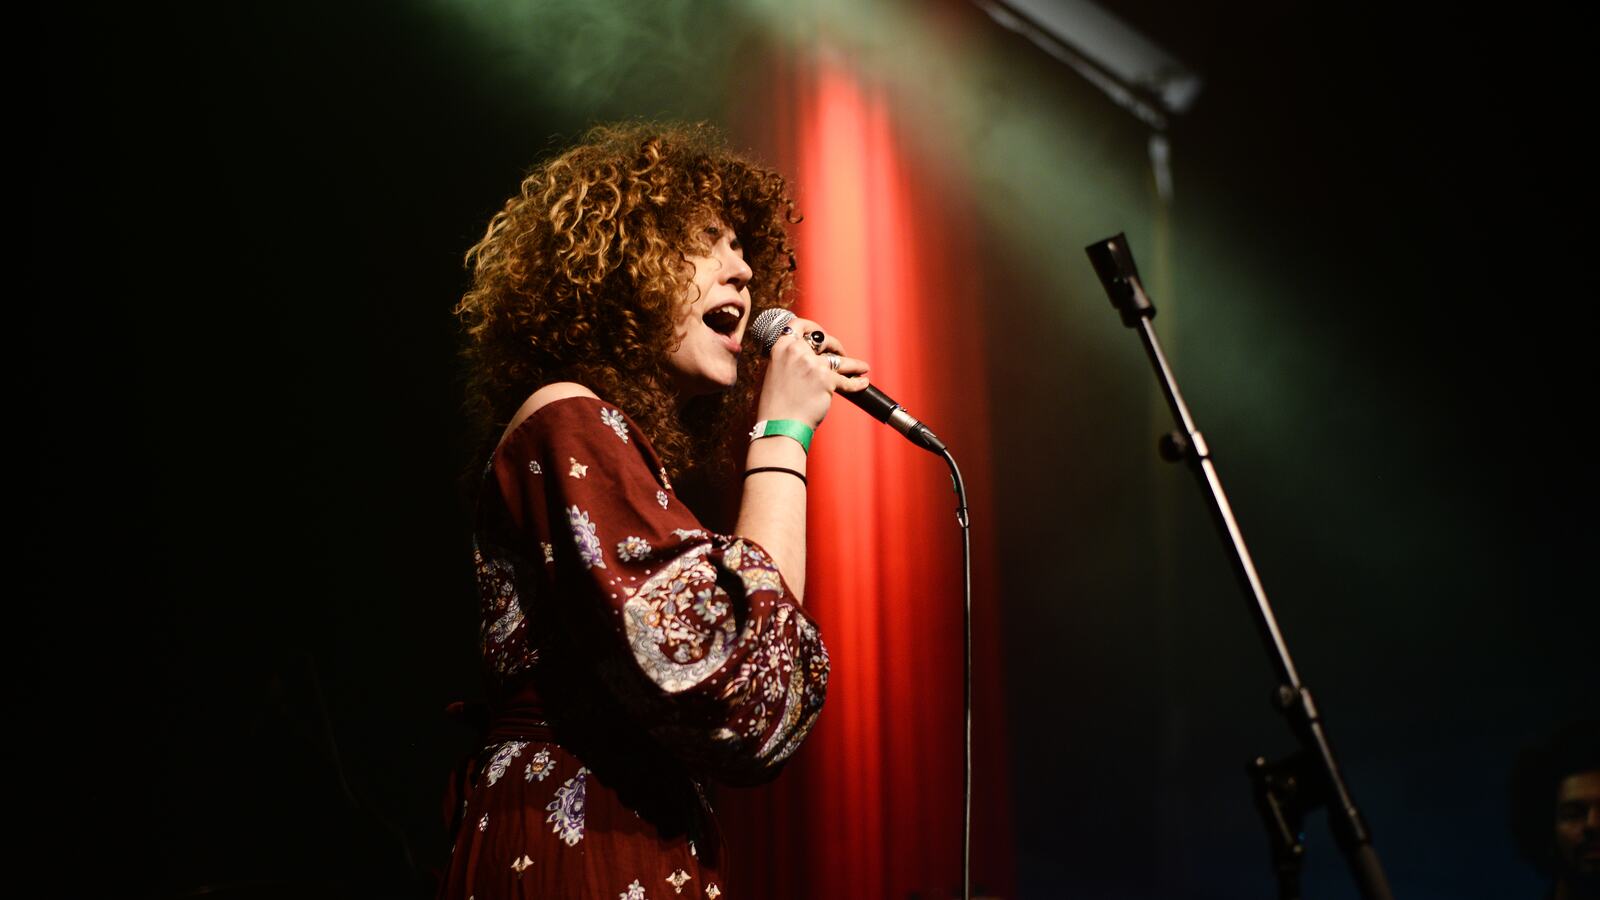 Clara Serra López, singer